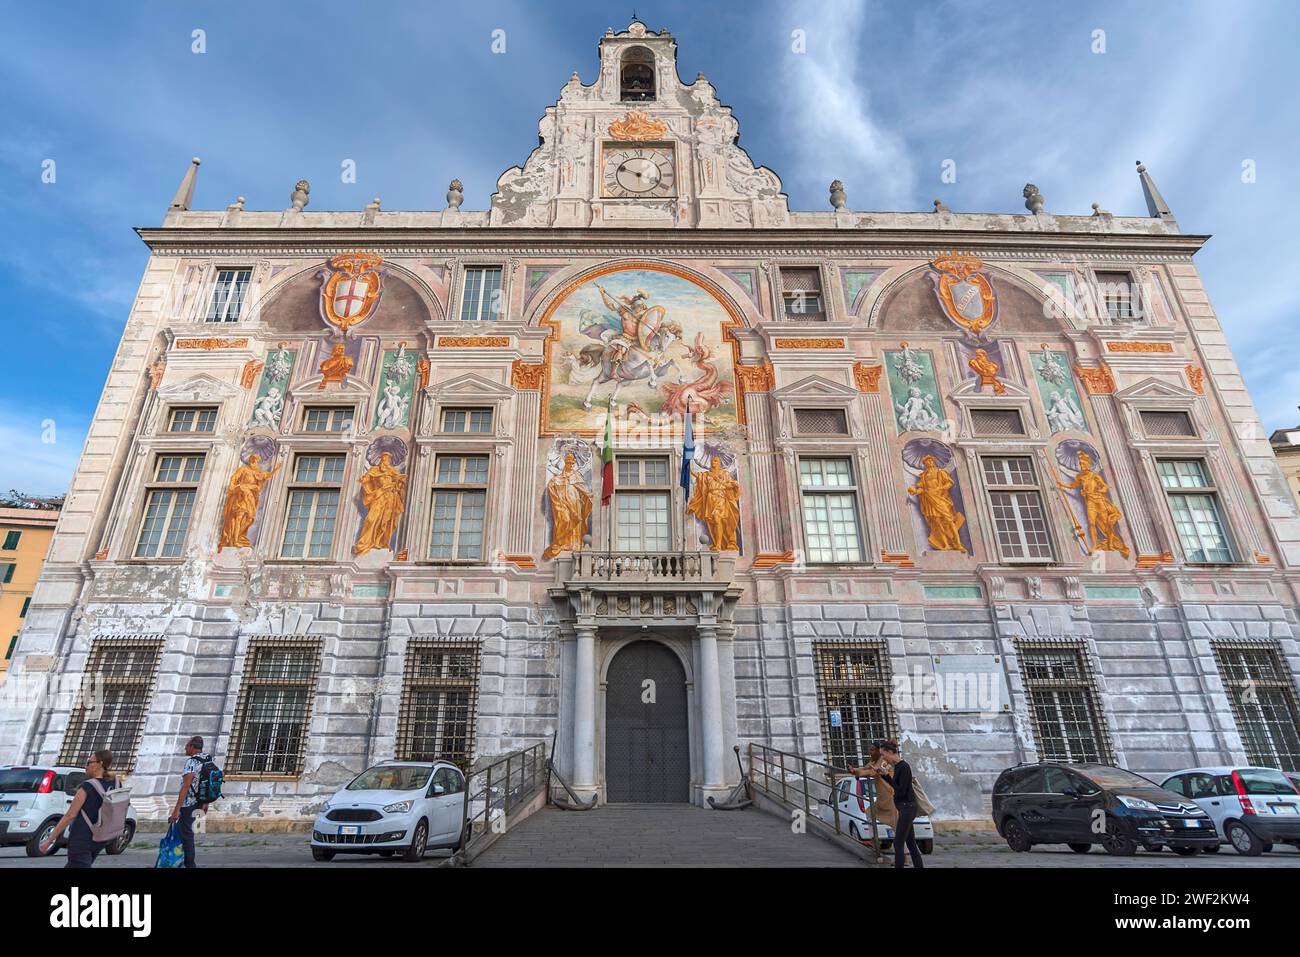 Façade du Palazzo San Giorgio gothique avec fresques de style Renaissance, construit en 1260, Palazzo San Giorgio, 2, Gênes, Italie Banque D'Images